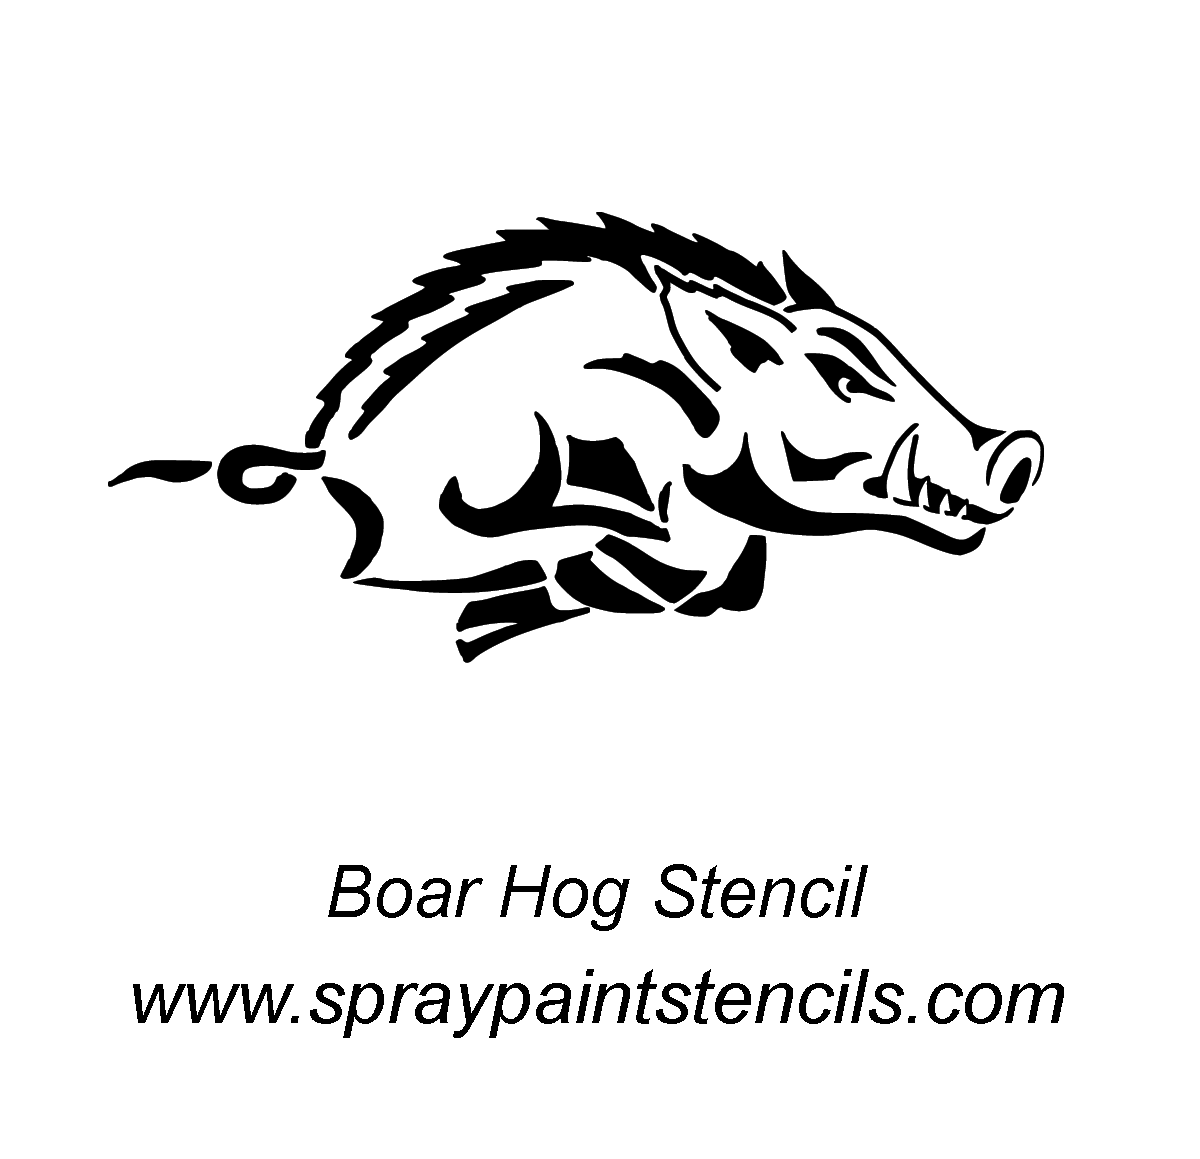 Hog Face Logo - razorback stencil - Kleo.wagenaardentistry.com